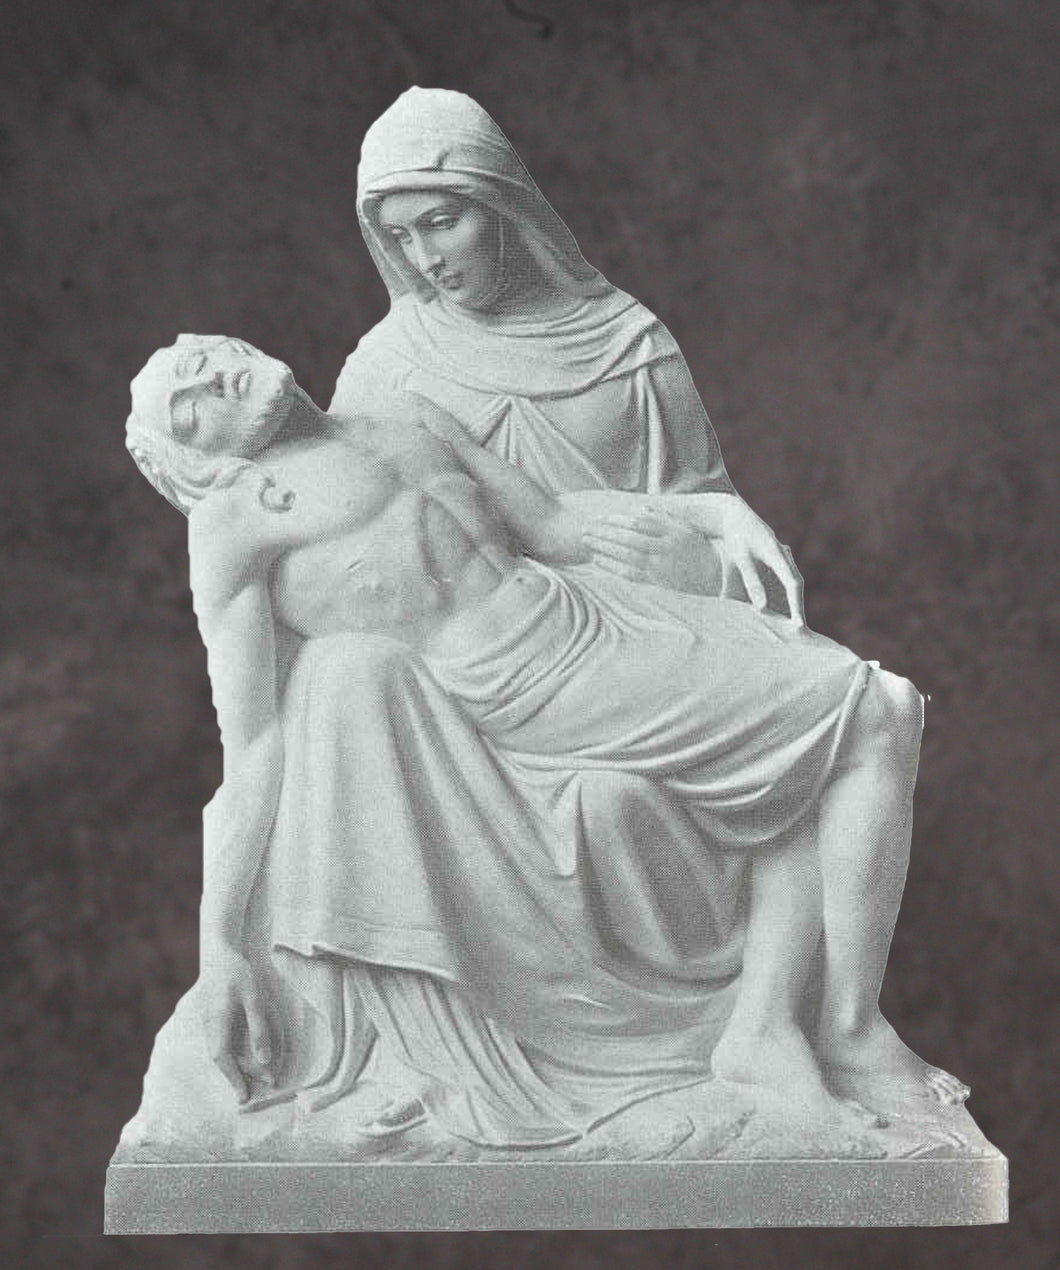 Pieta Statue by De De Prato in Solid Marble - 24”H